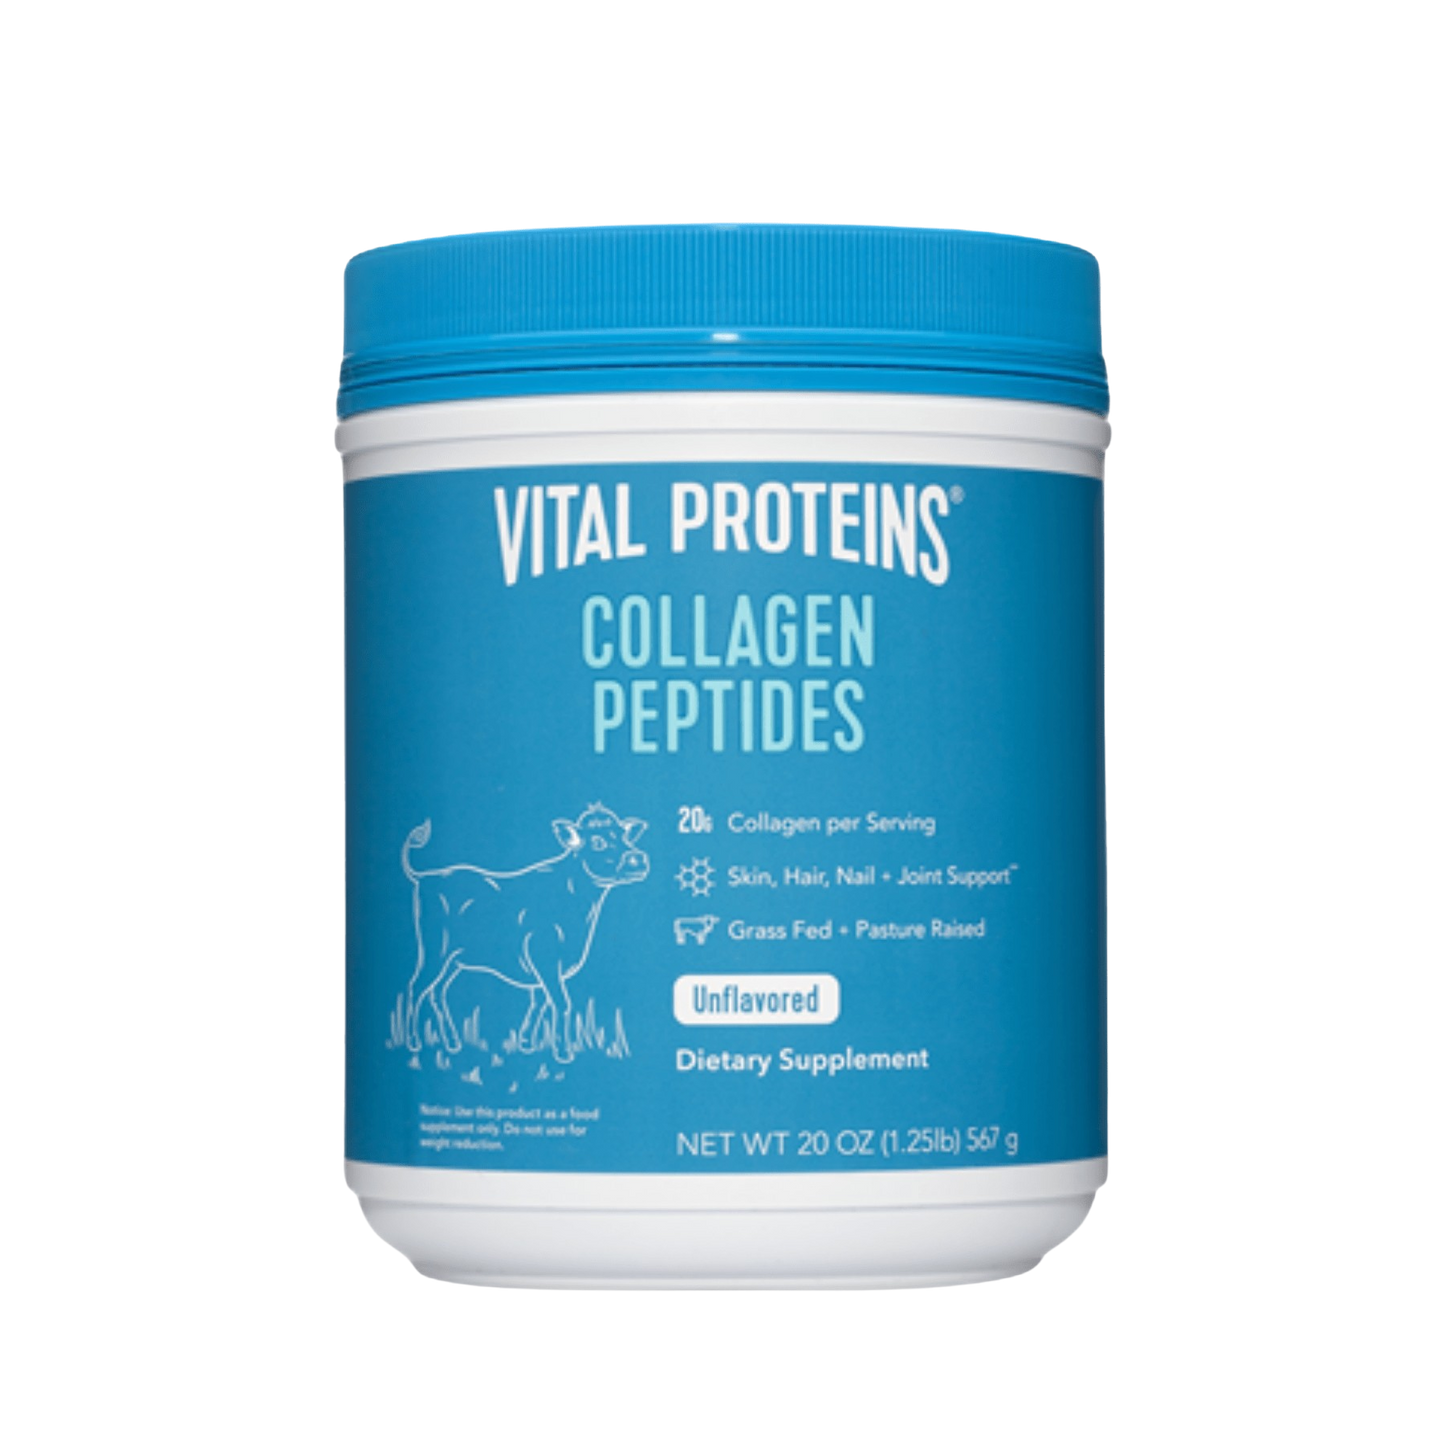 Vital Proteins Collagen Peptides Powder 20 oz Tub